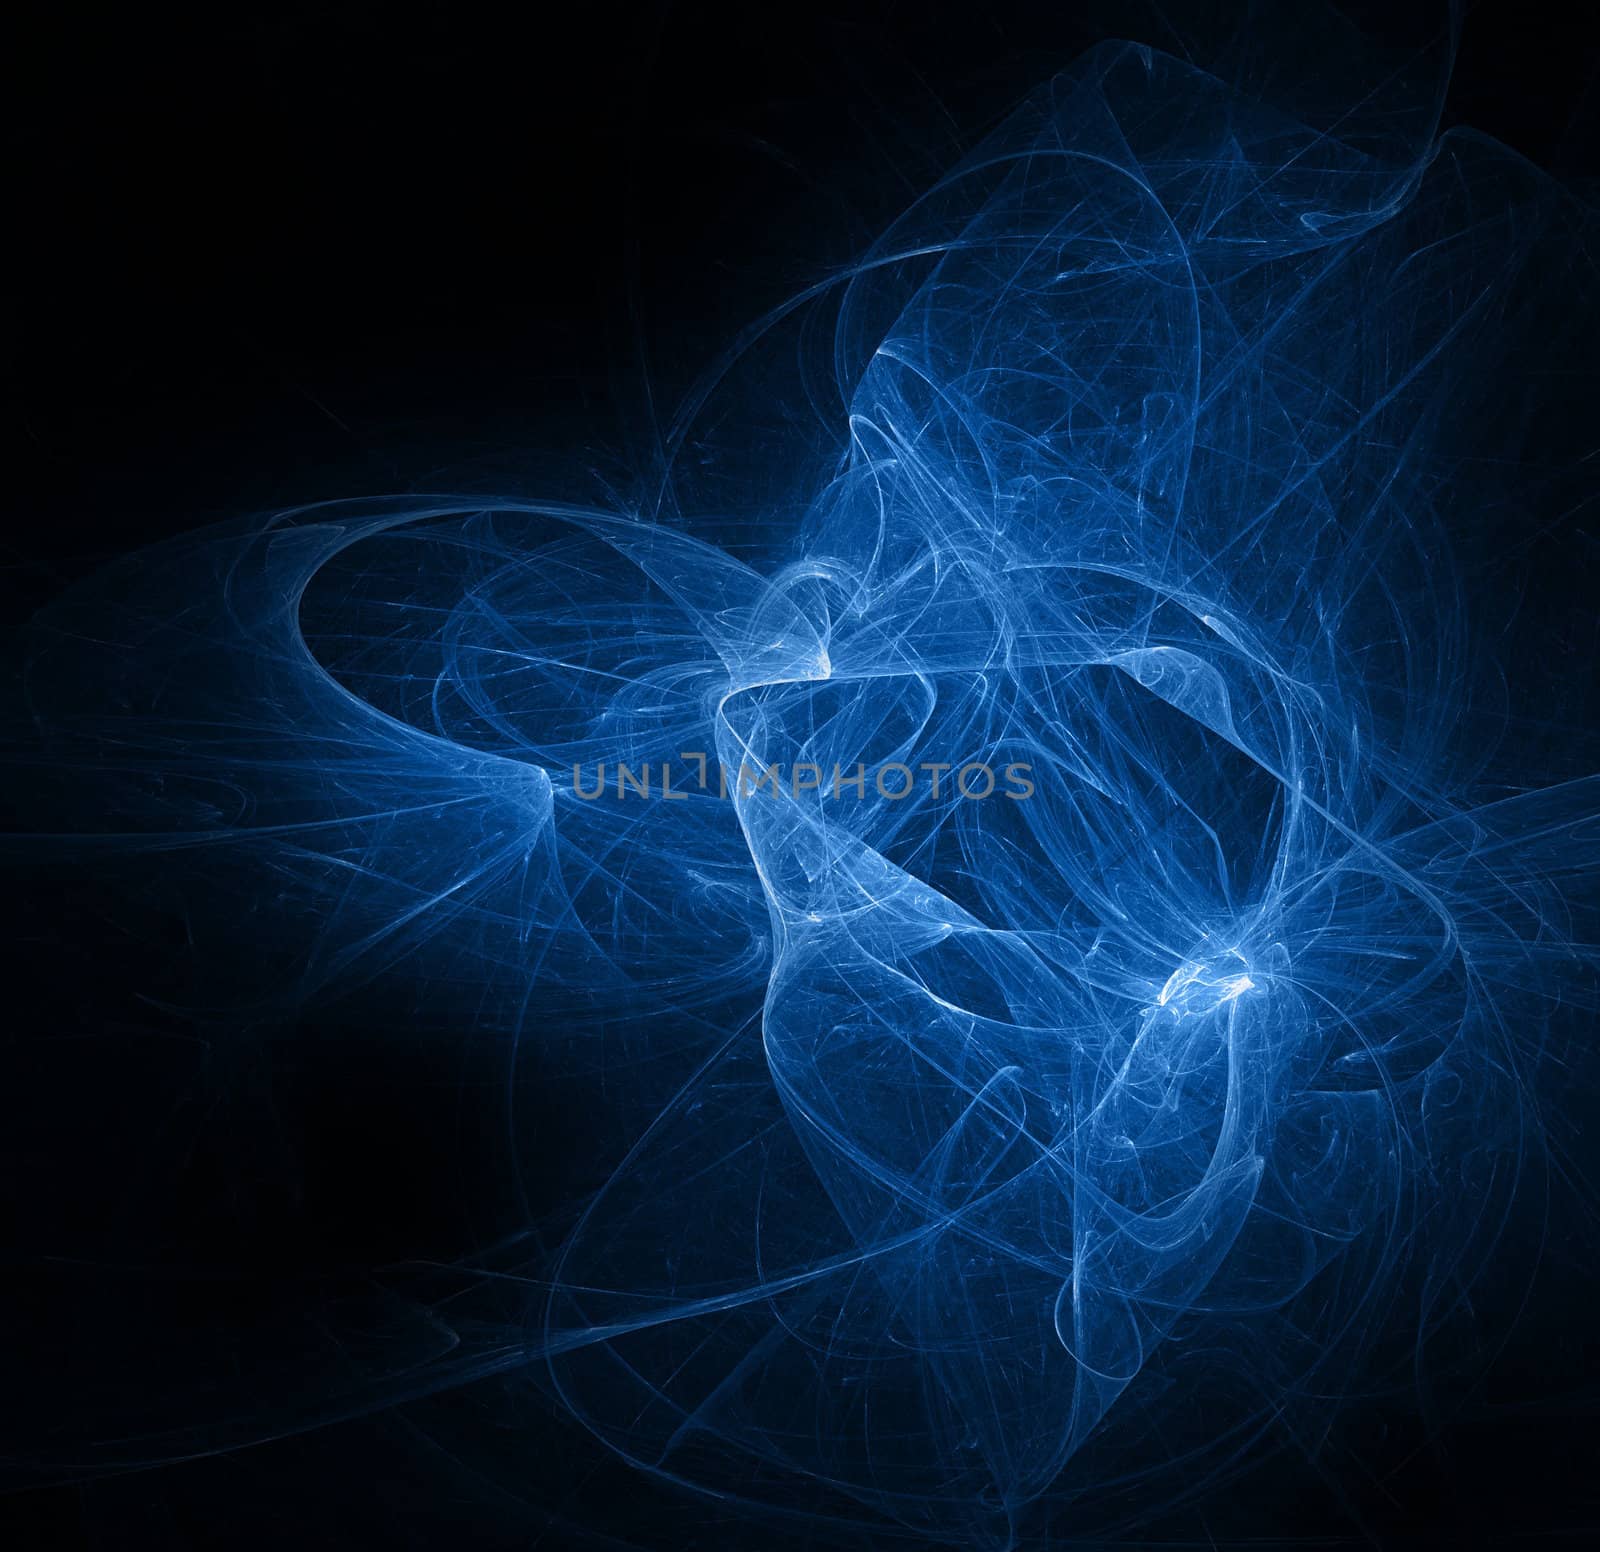 Cosmos fractal on black background